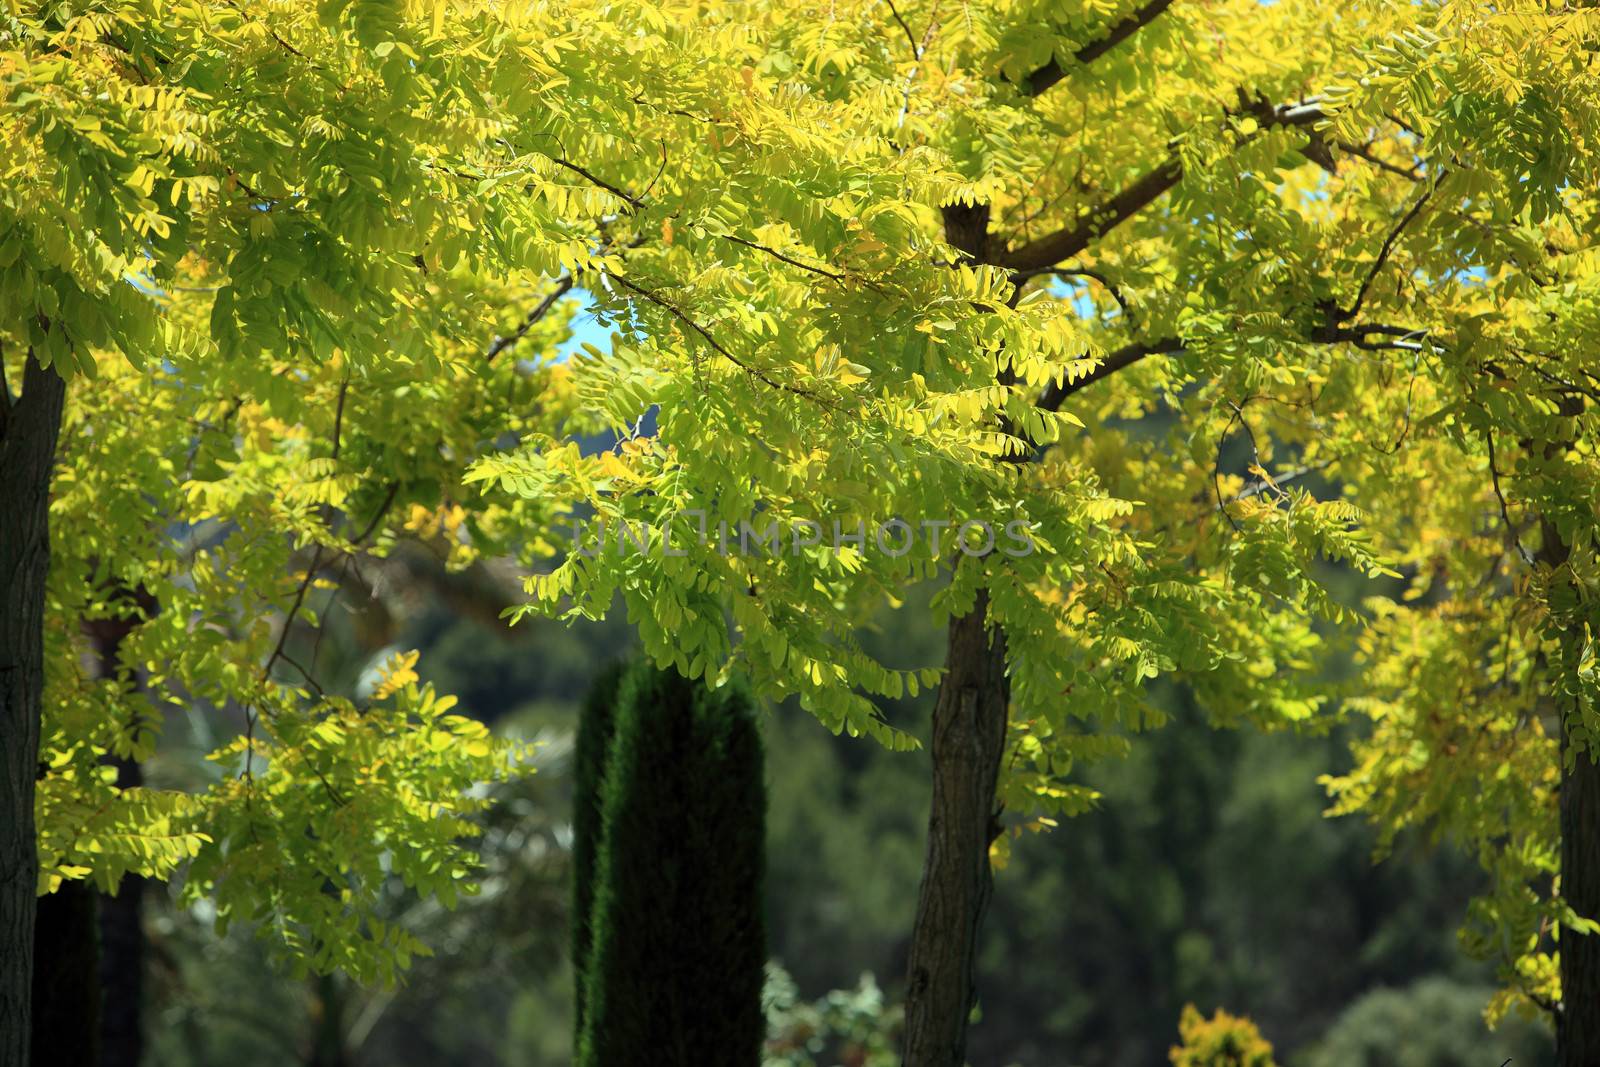 Background environmental image of leafy woodland trees with beautiful vivid yellow foliage